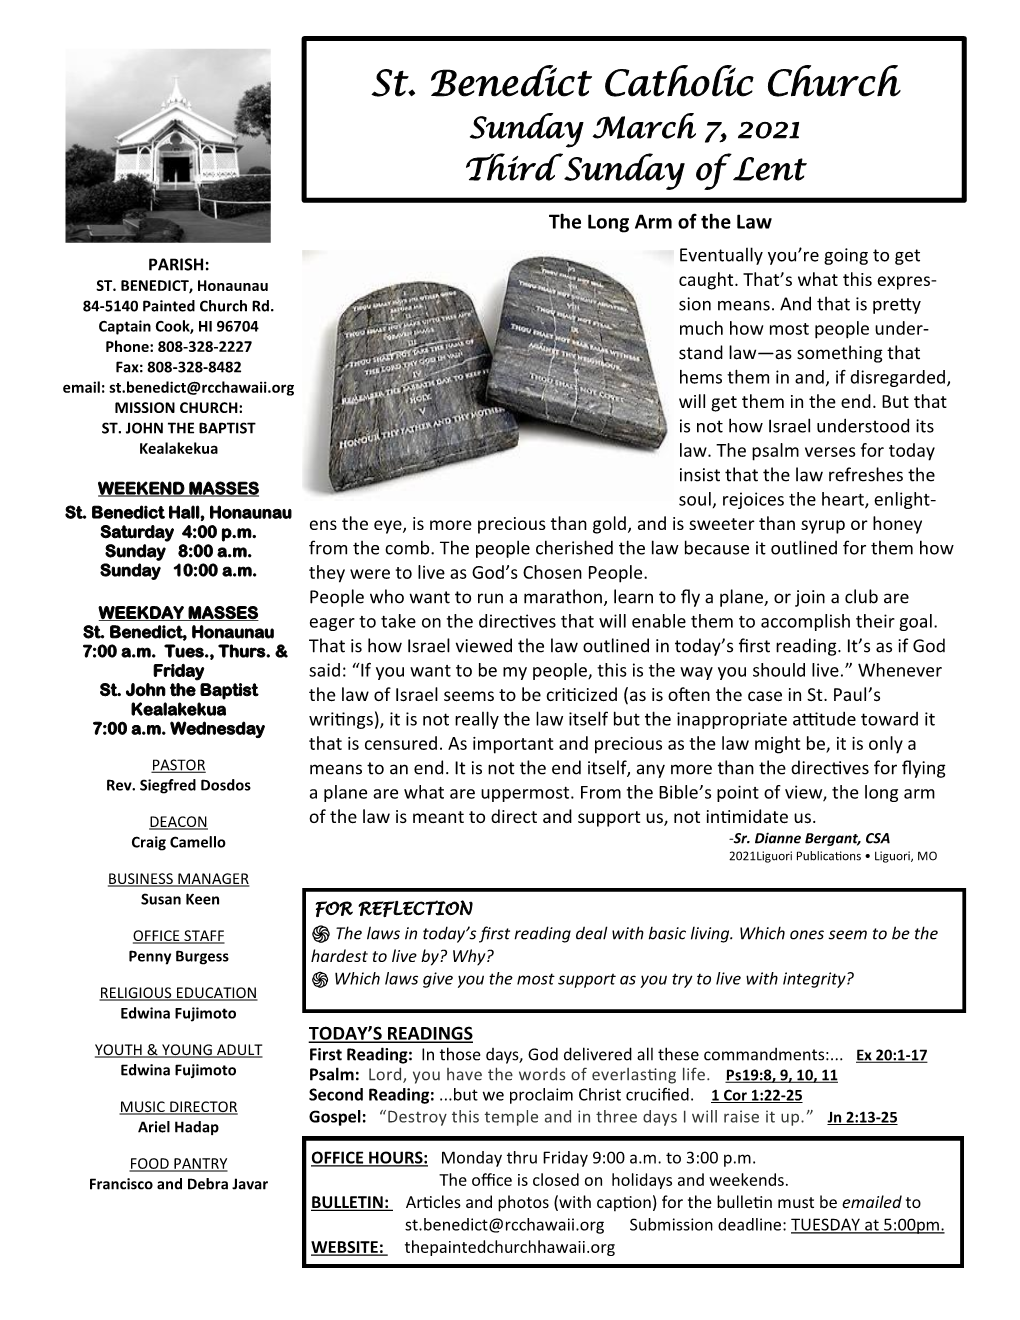 Sunday March 7, 2021 Third Sunday of Lent